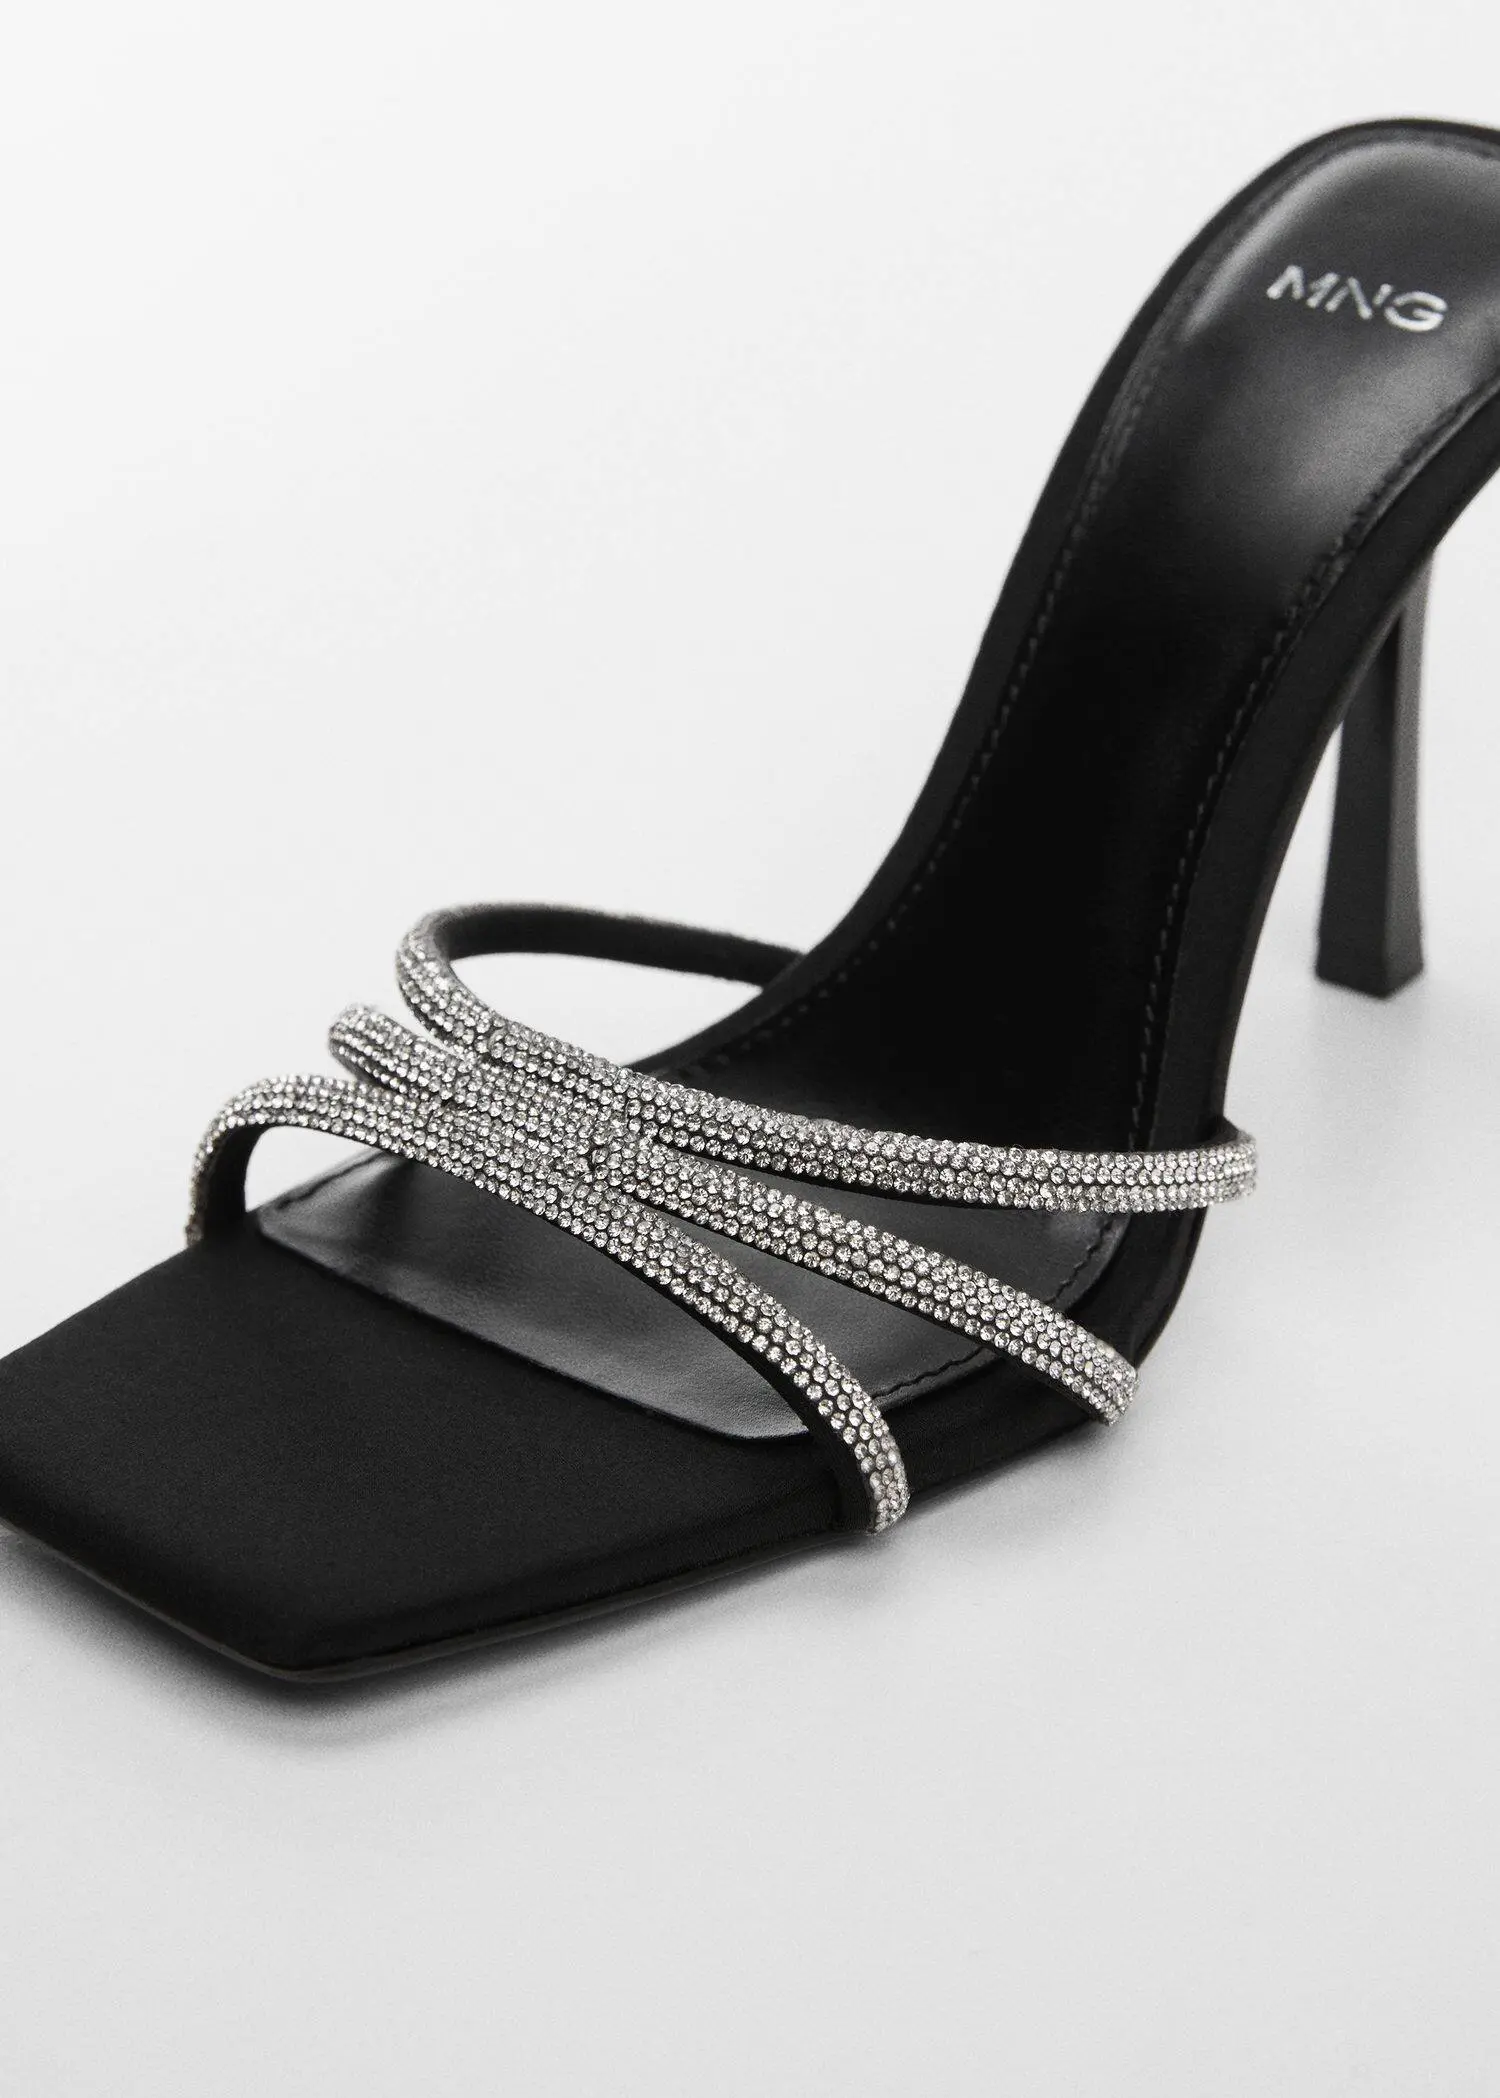 Mango Heeled sandals with rhinestone straps. 3